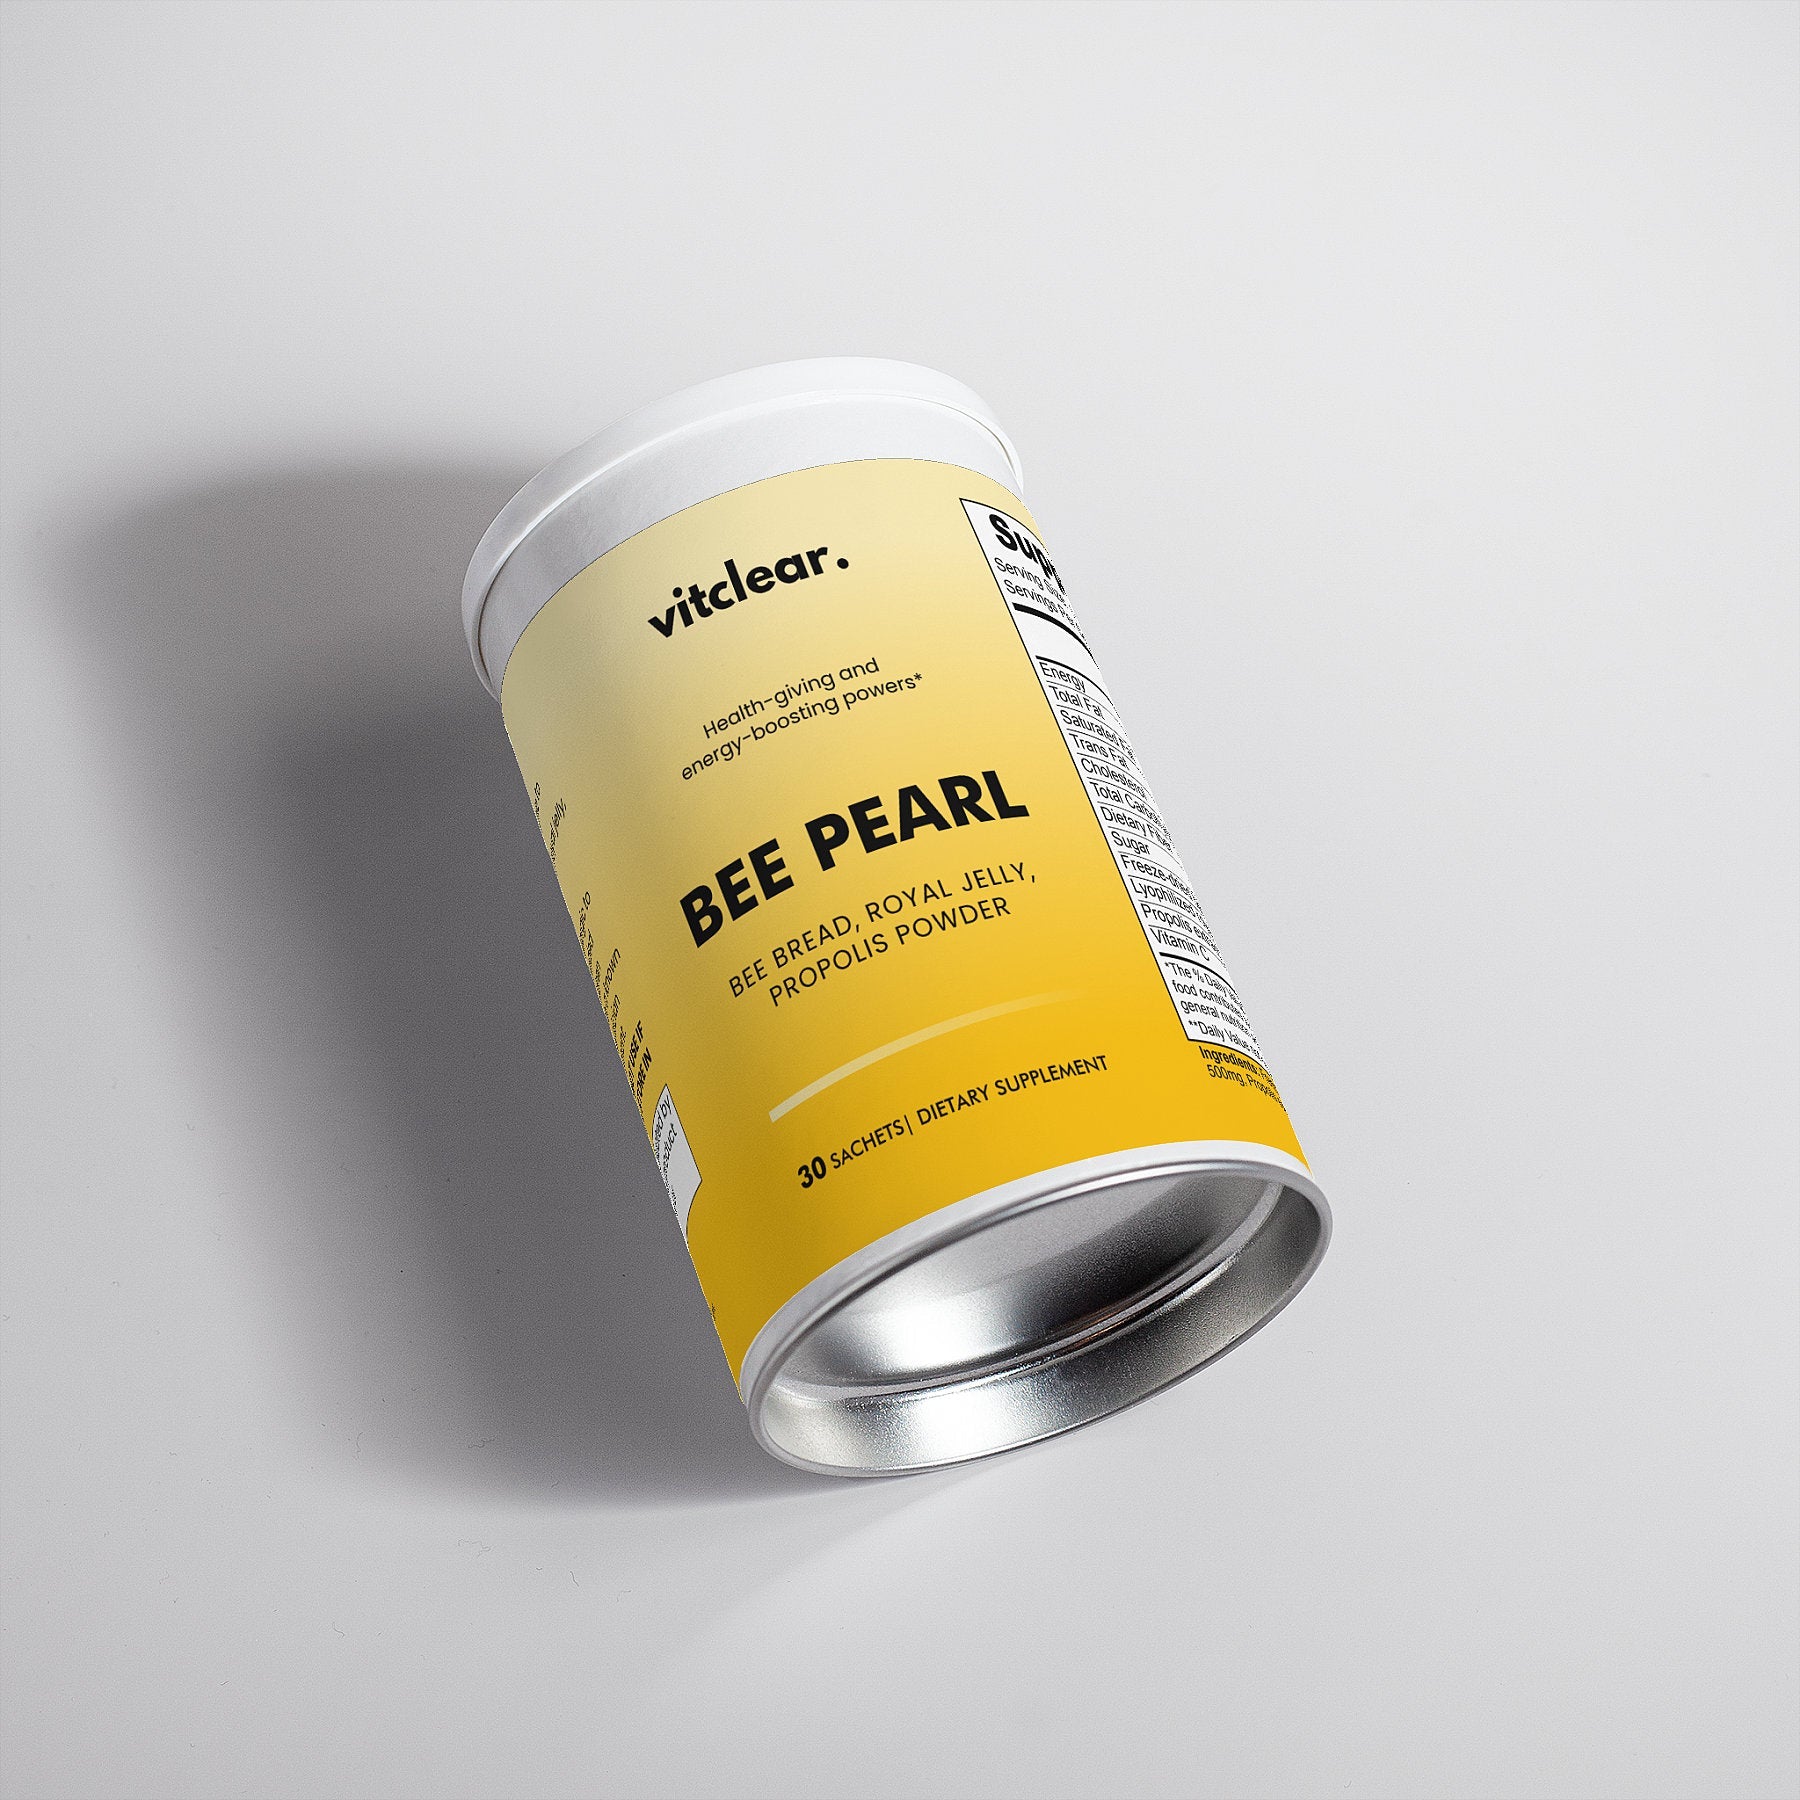 Bee Pearl Powder - VitClear